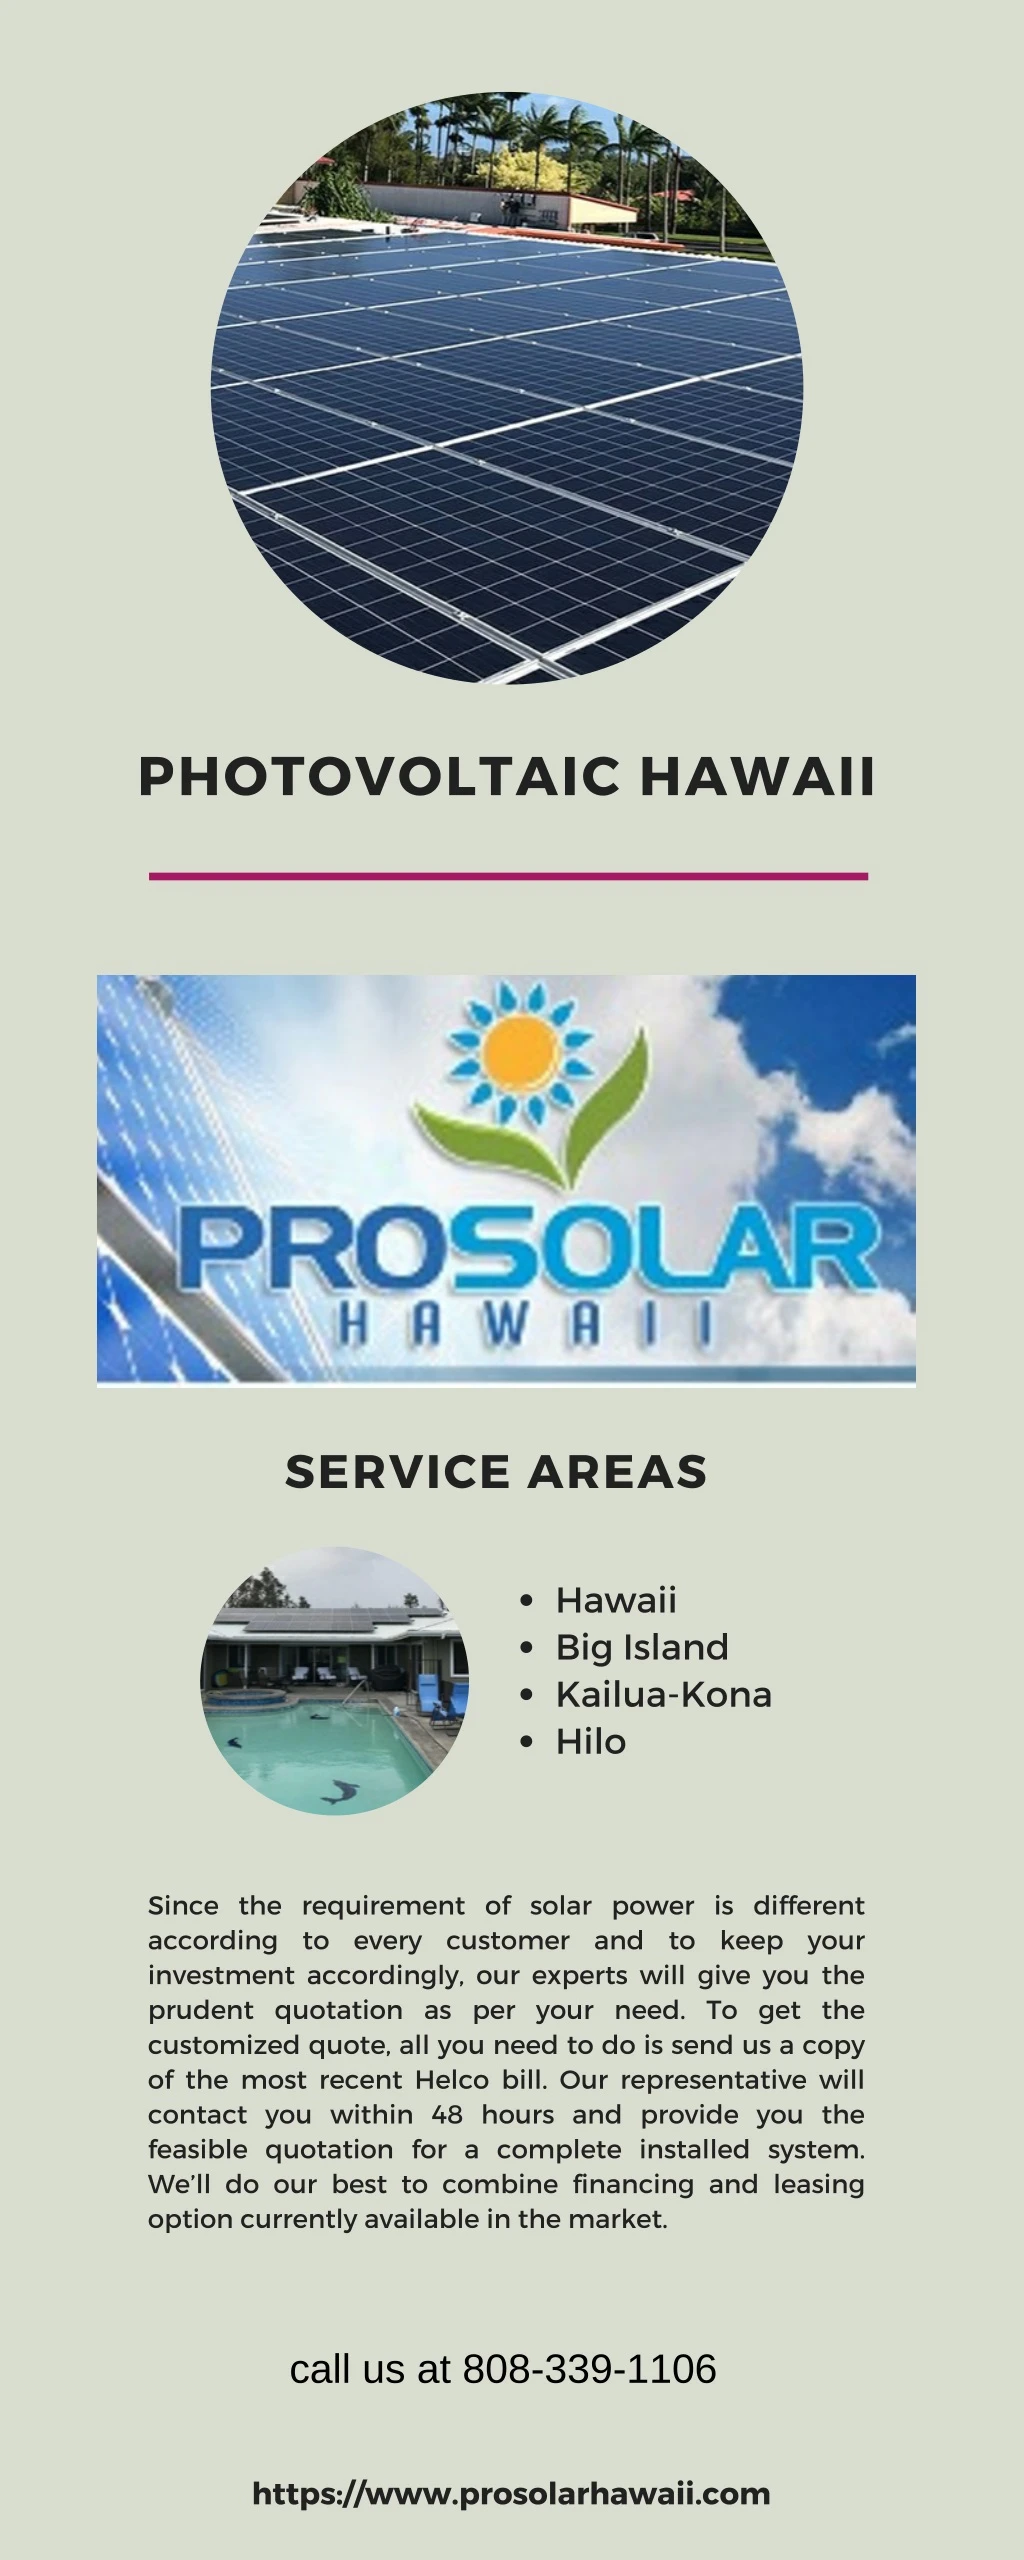 photovoltaic hawaii